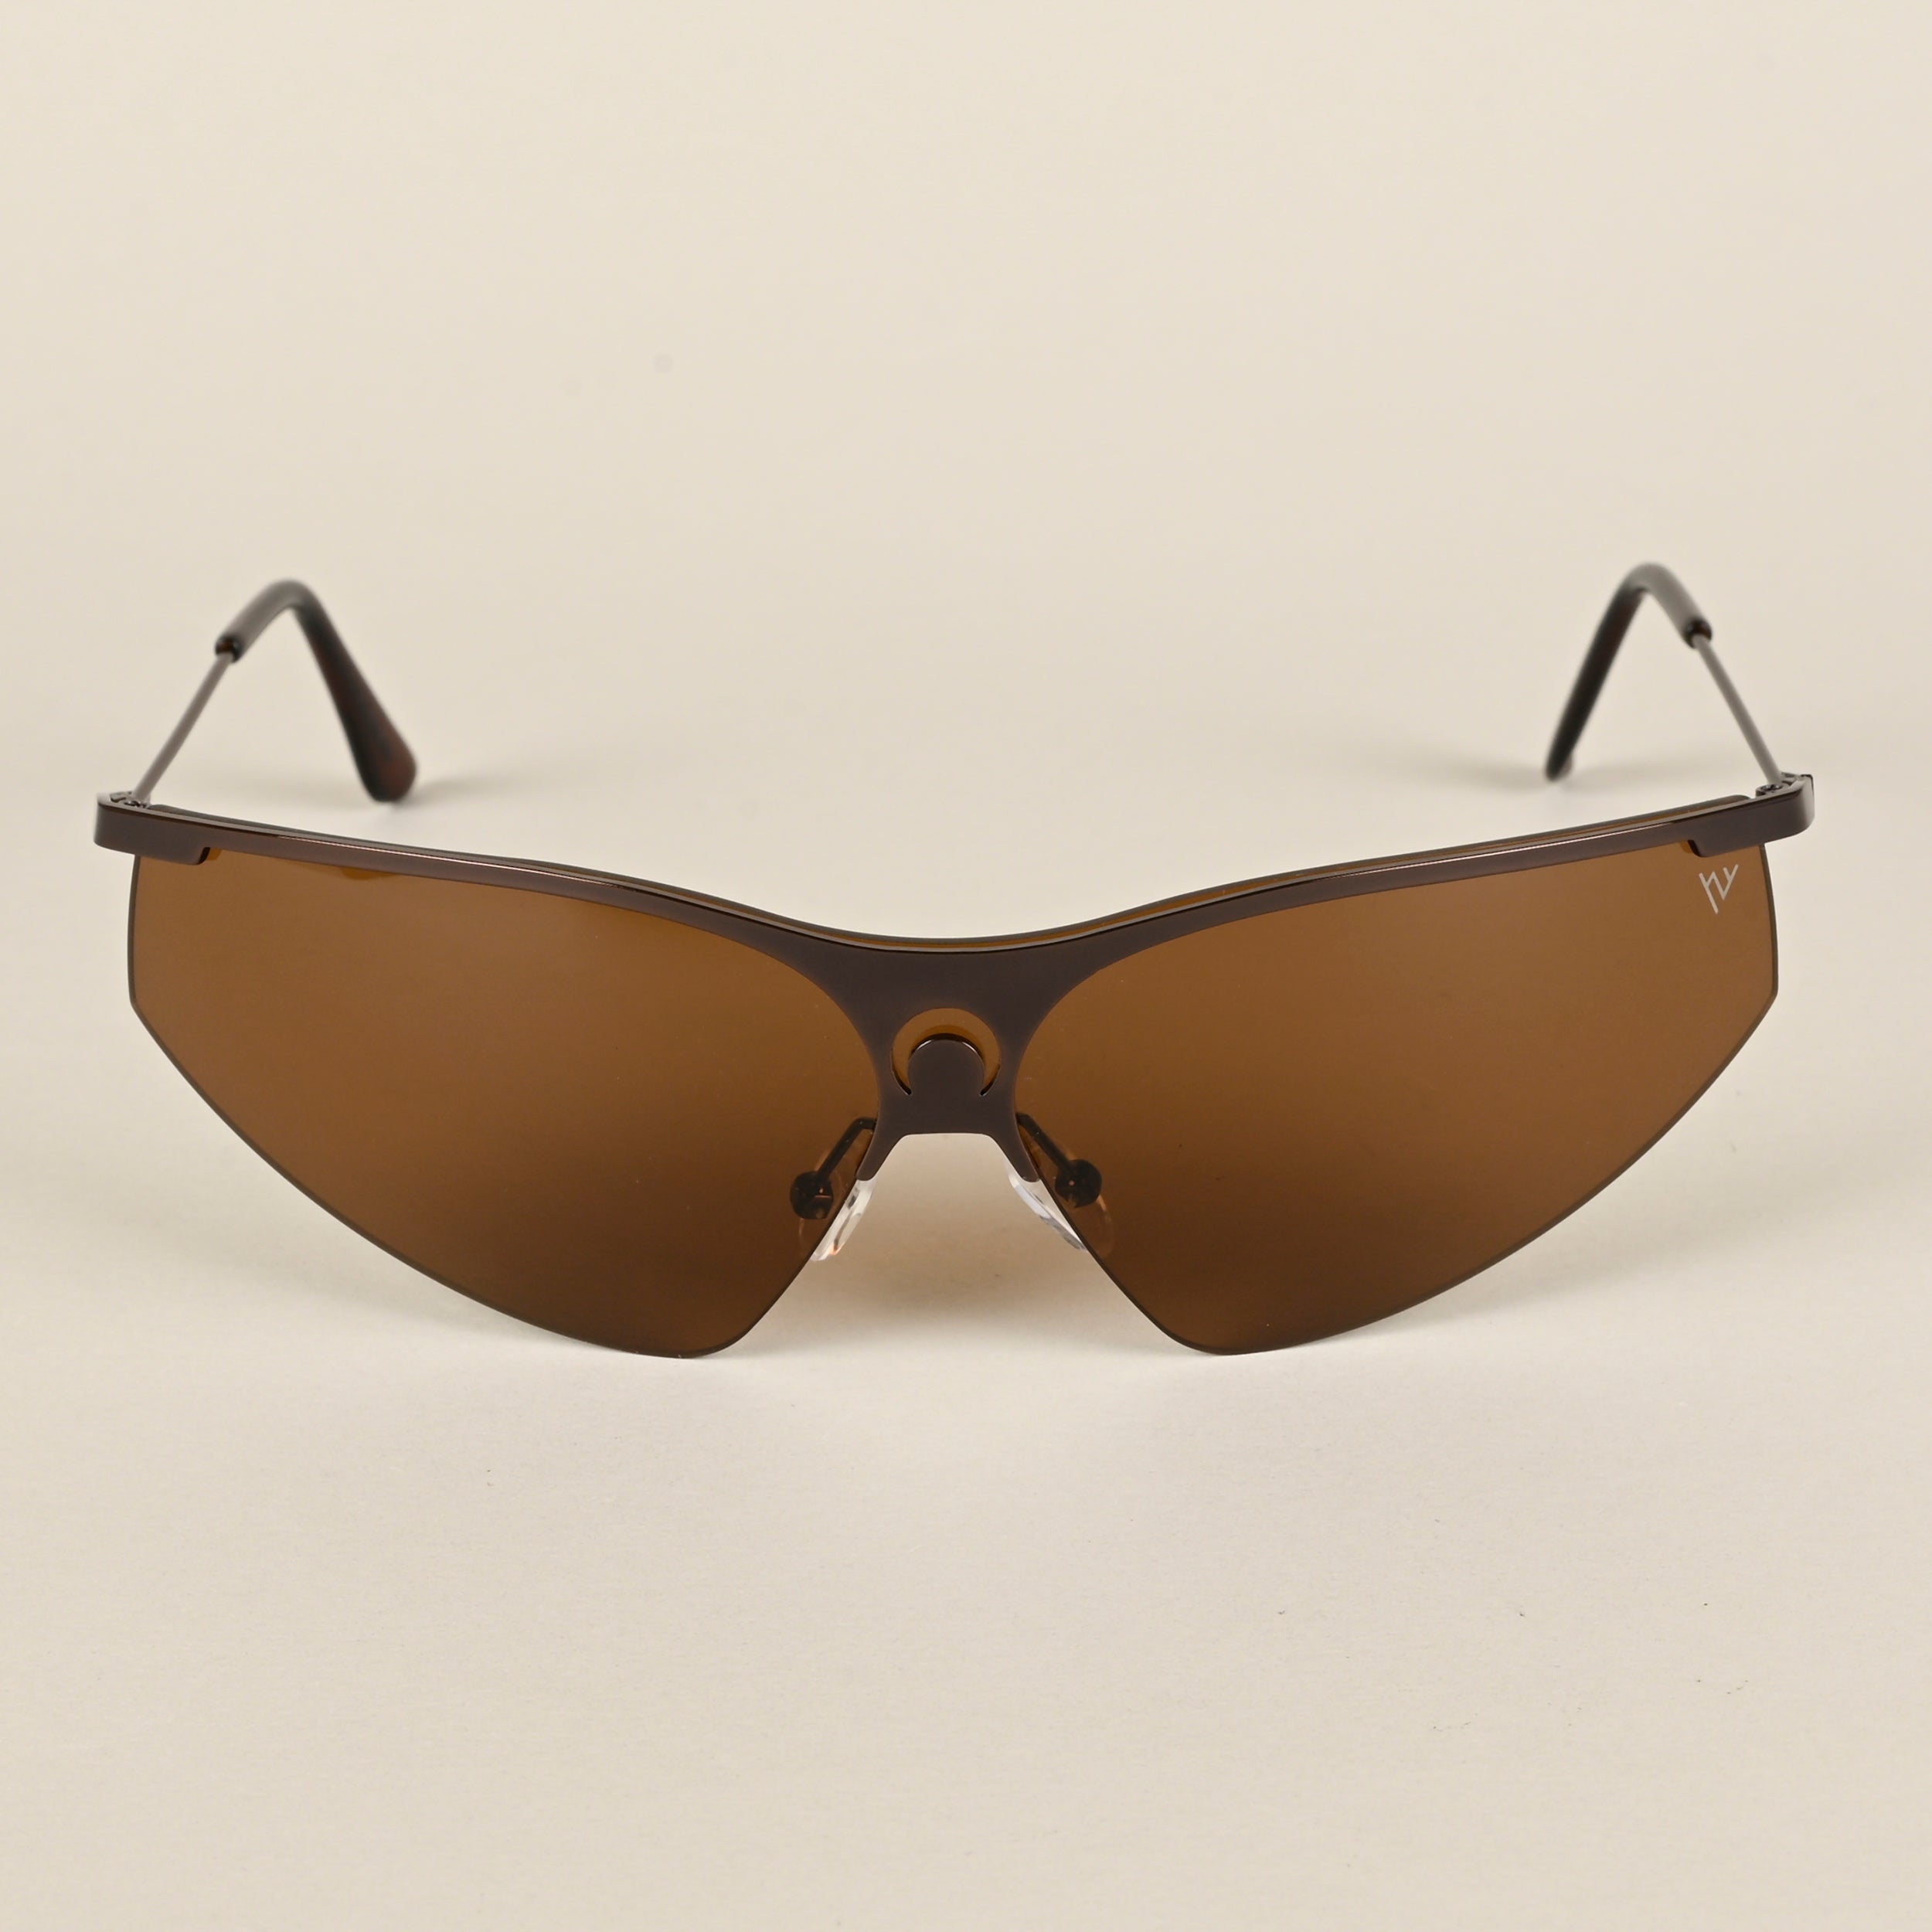 Voyage Brown Wrap-Around Sunglasses for Men & Women - MG4223